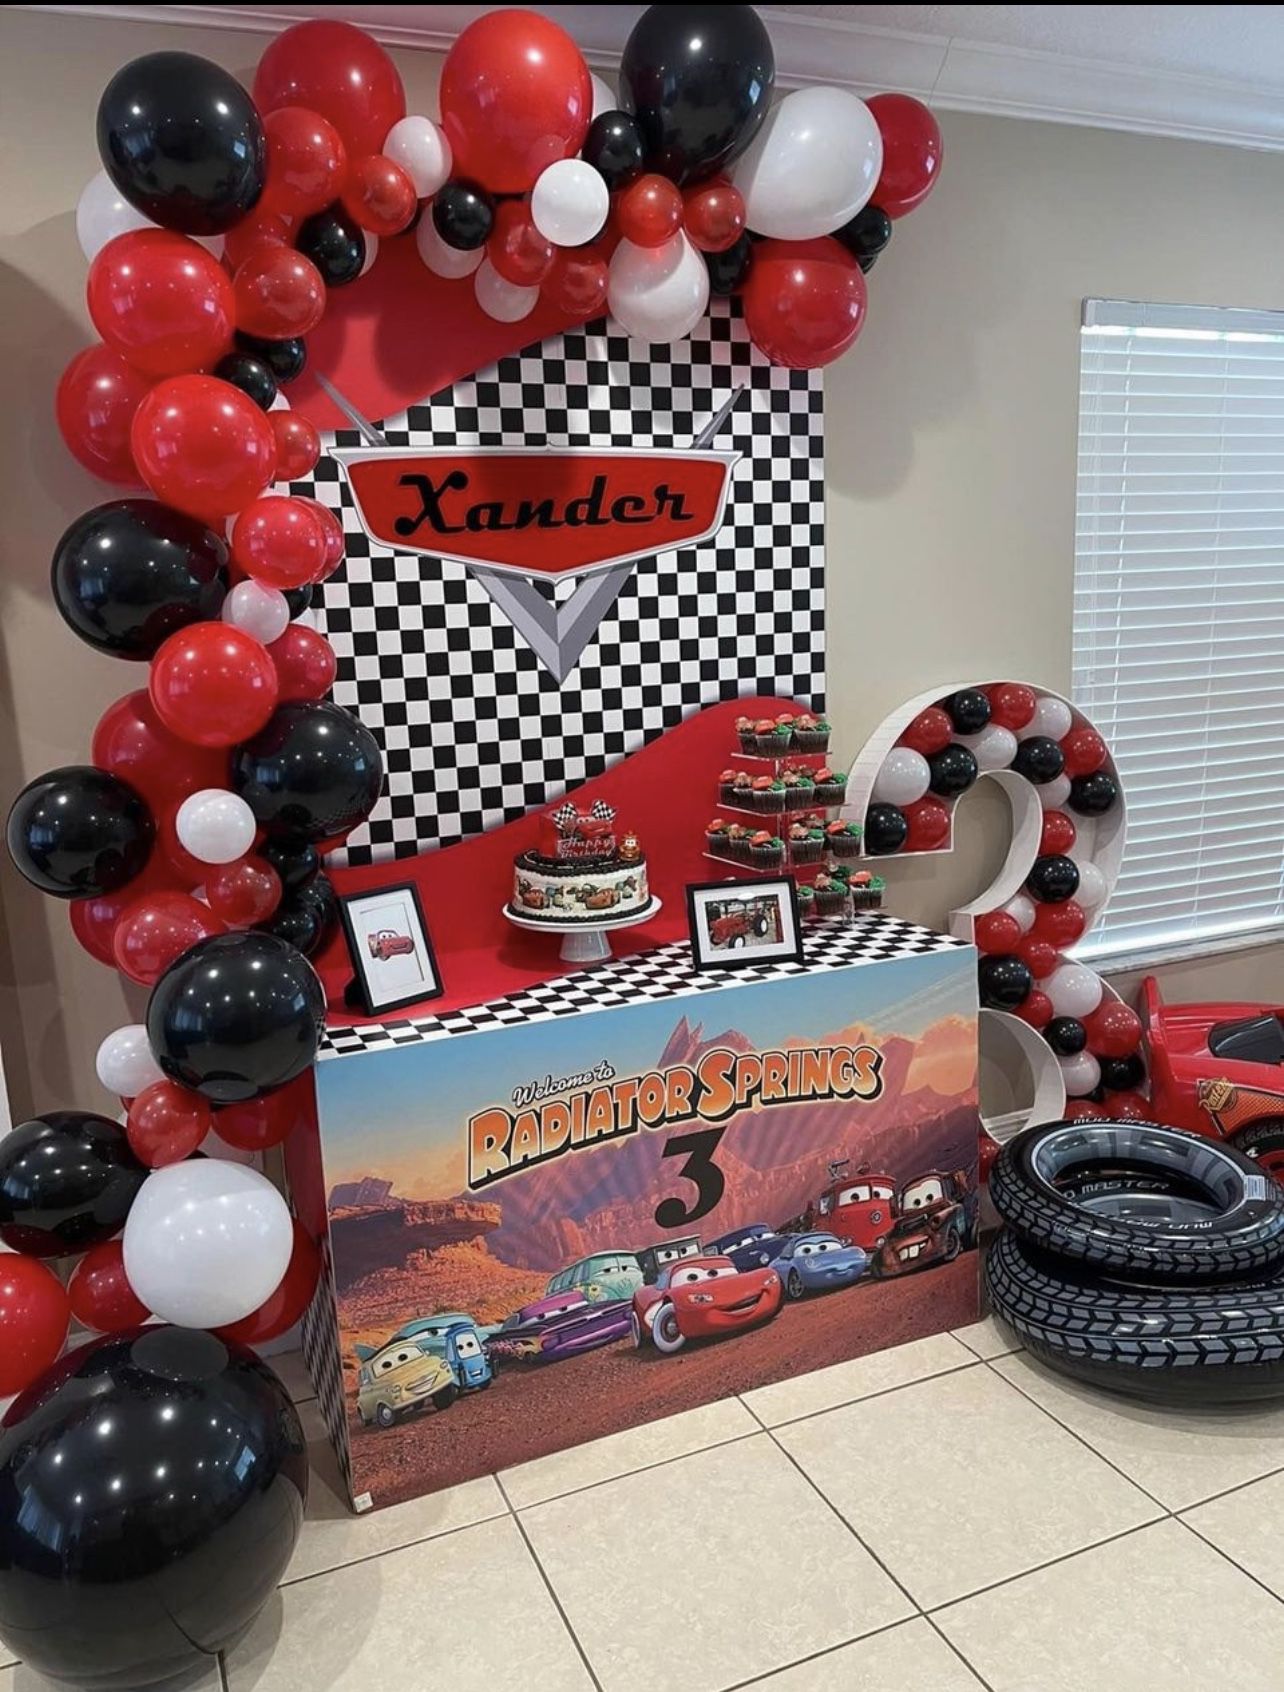 Cars McQueen Birthday party Fiesta decorations decor 